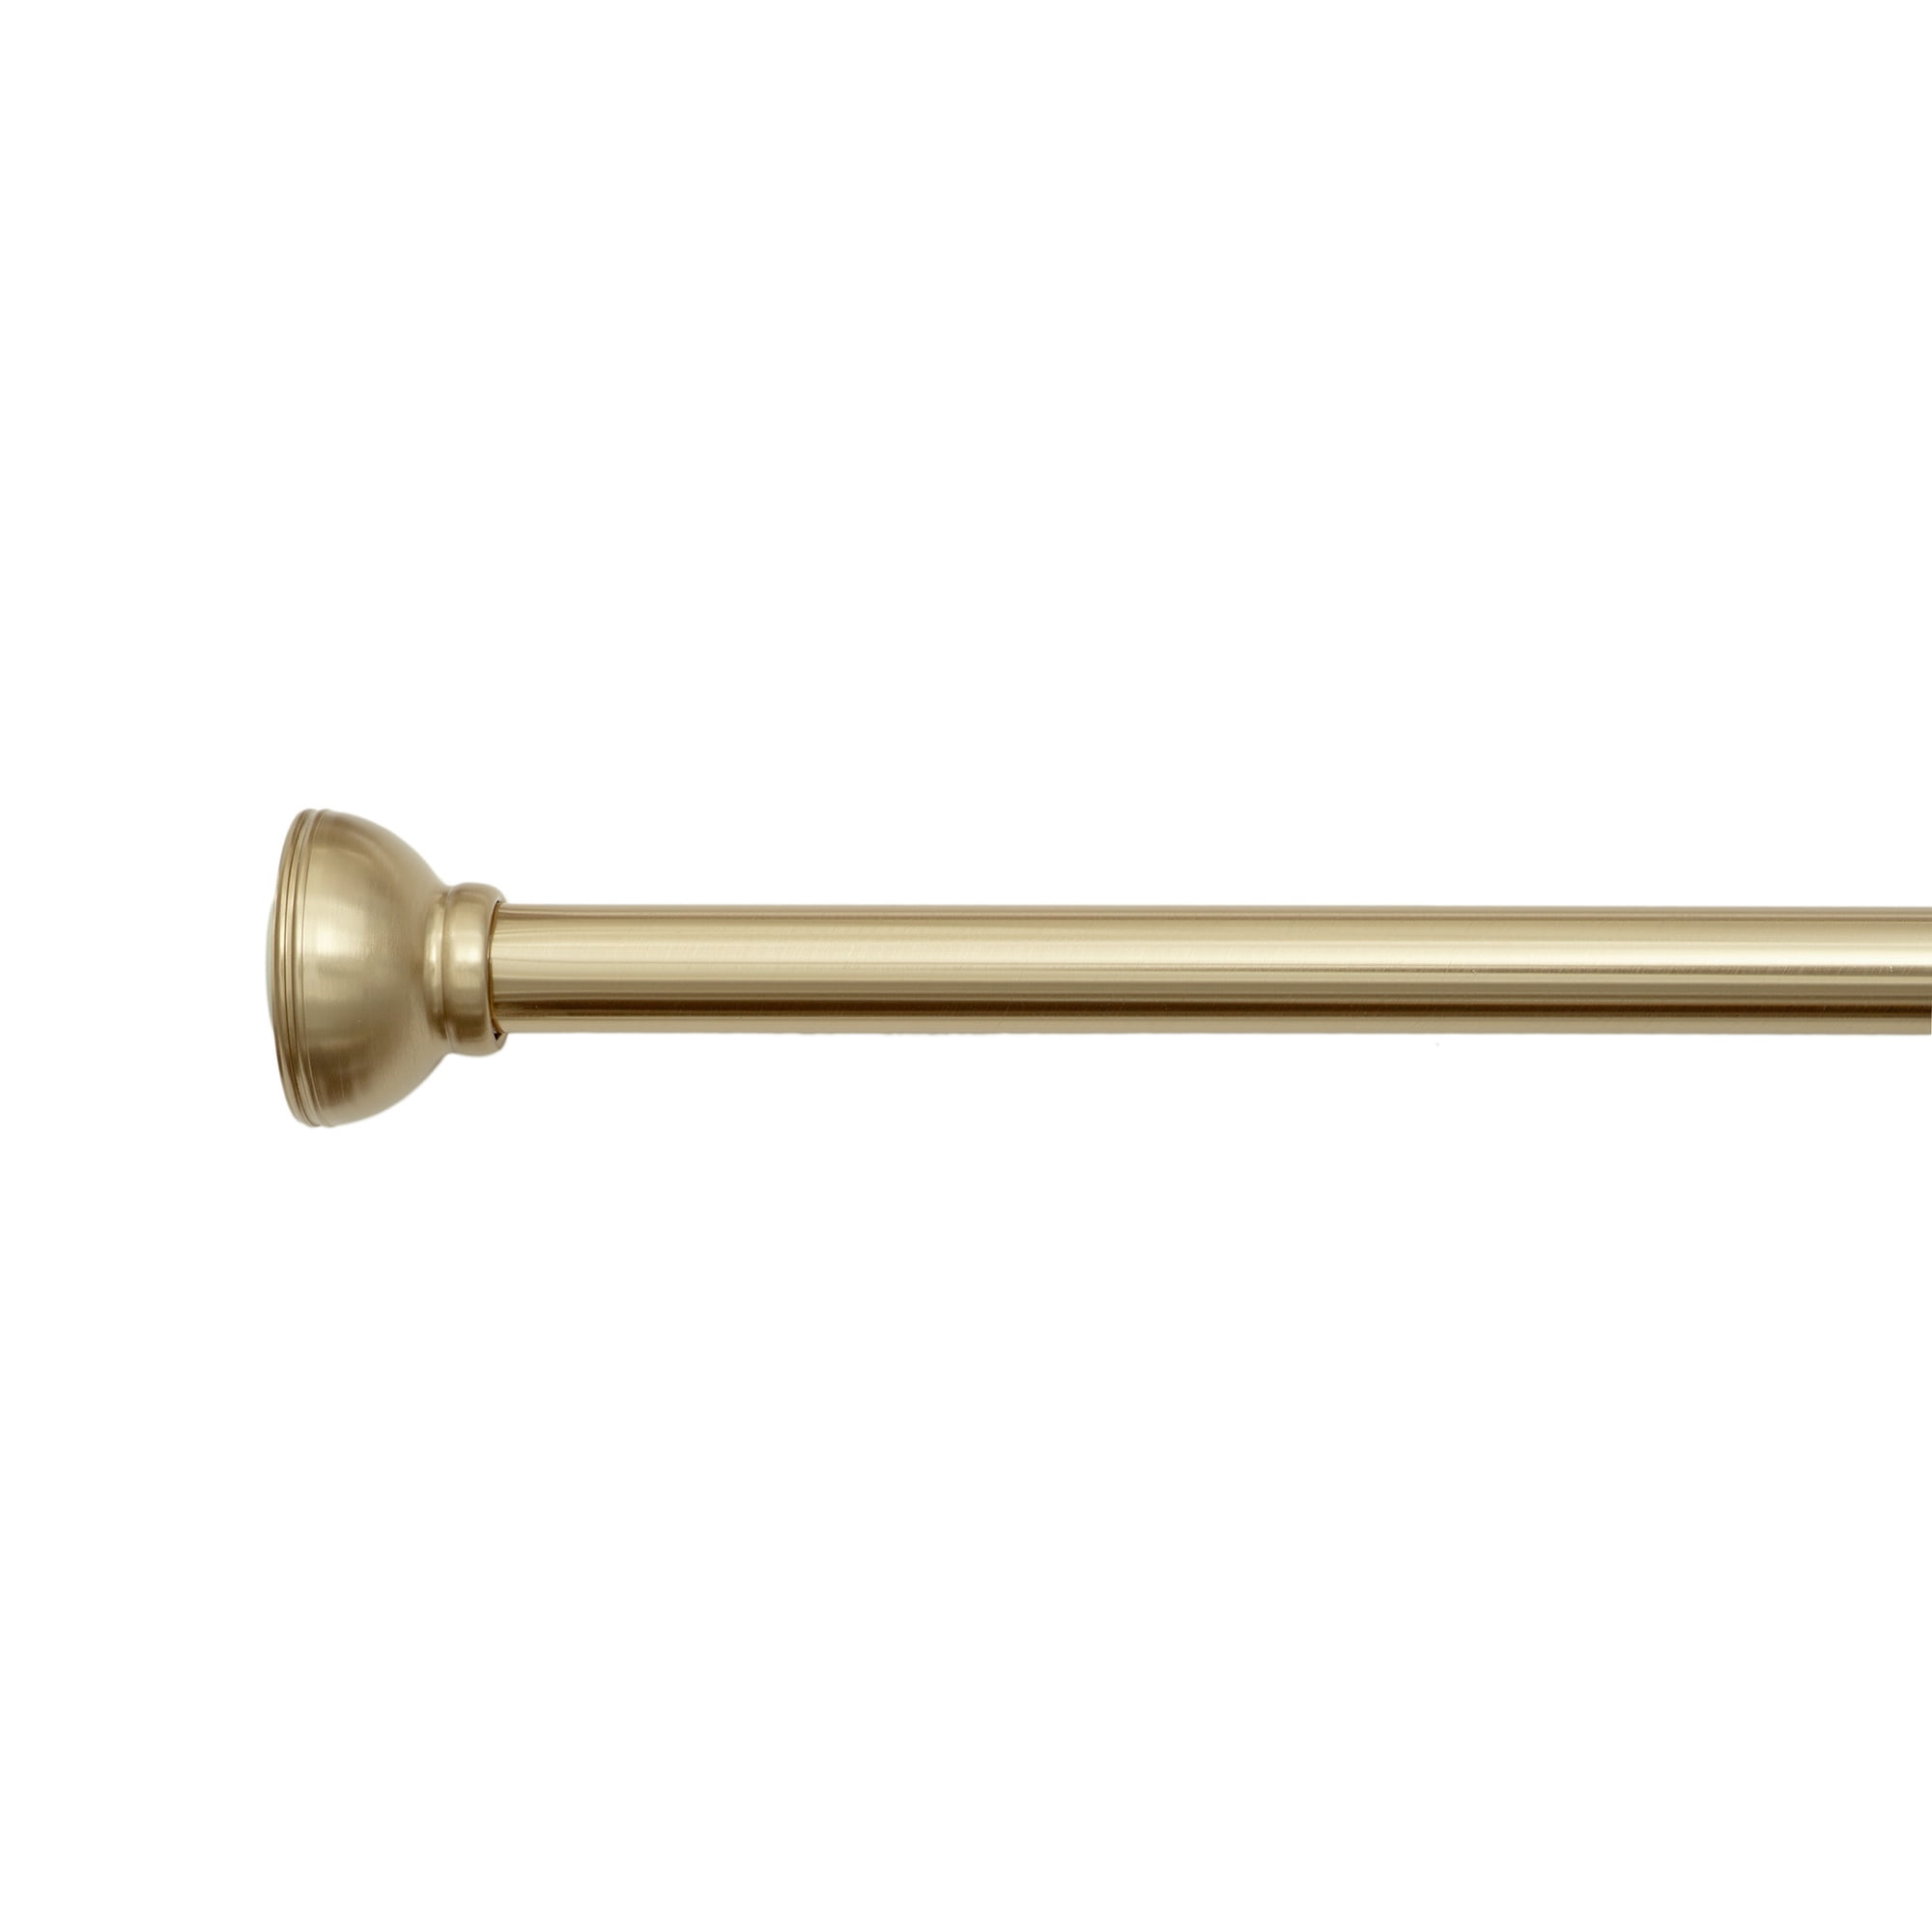 Antique Brass Shower Tension Rod, Antique Shower Curtain Rail